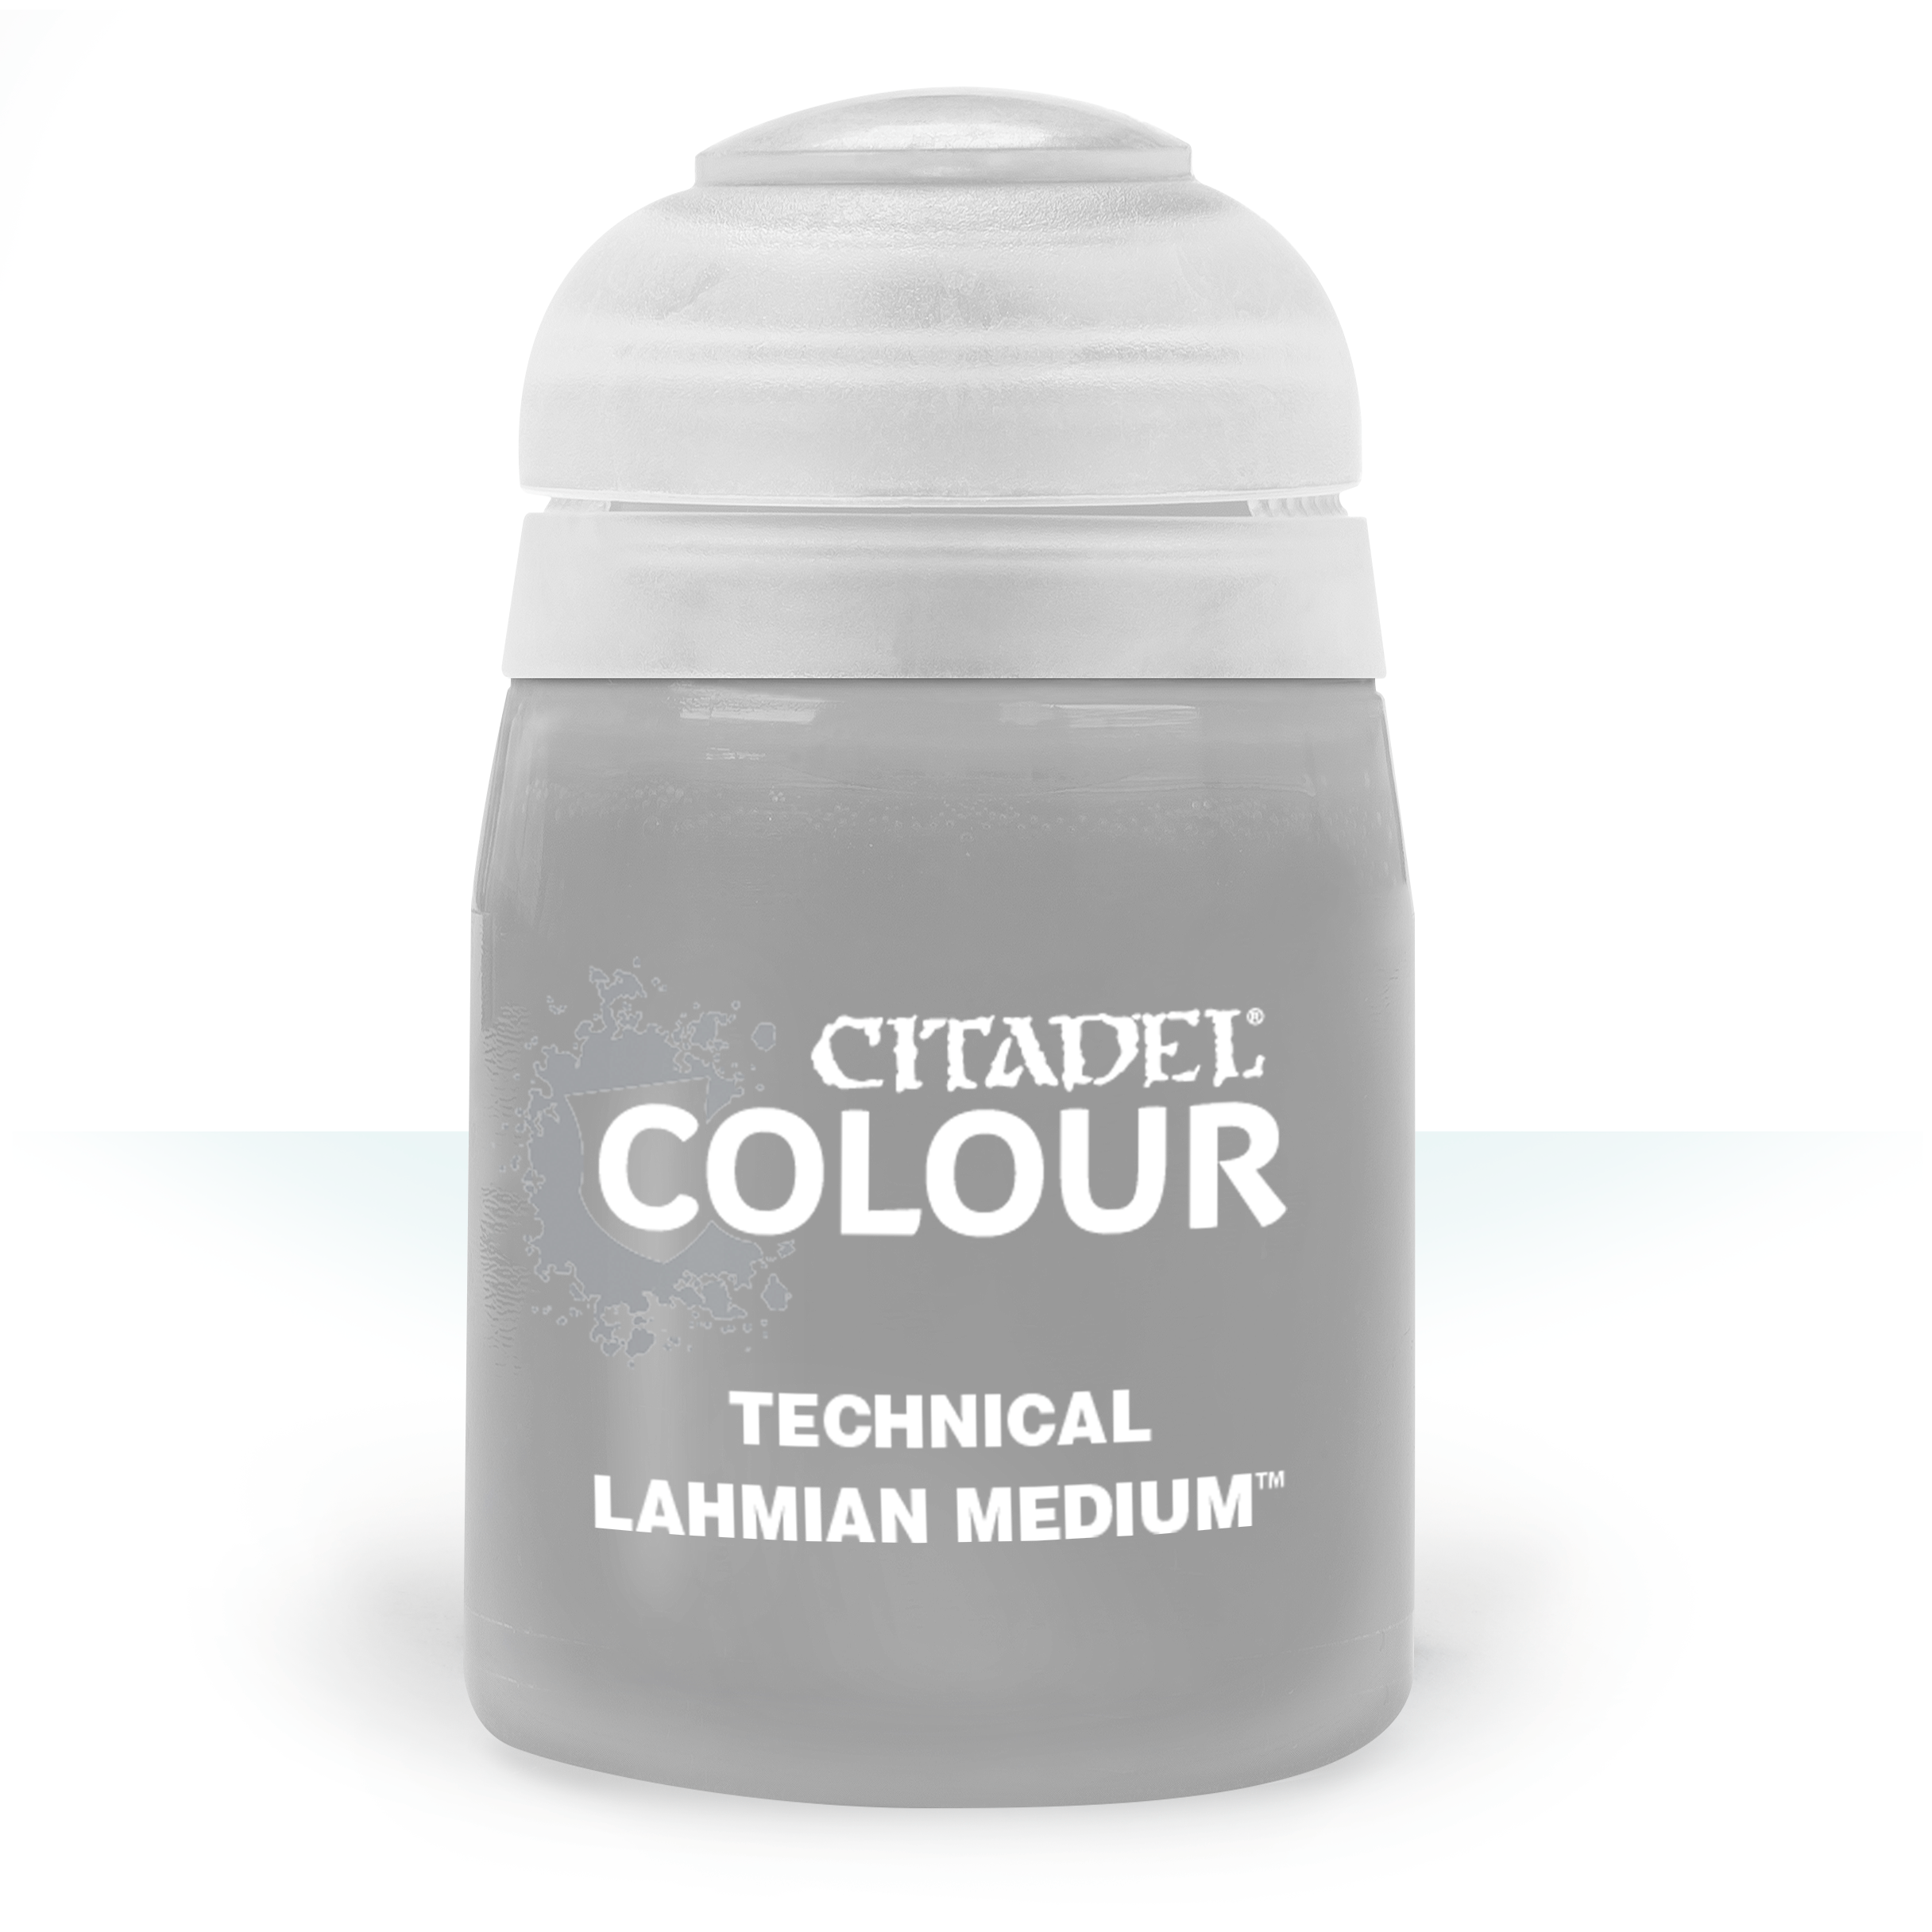 Lahmian Medium - Citadel Technical Paints